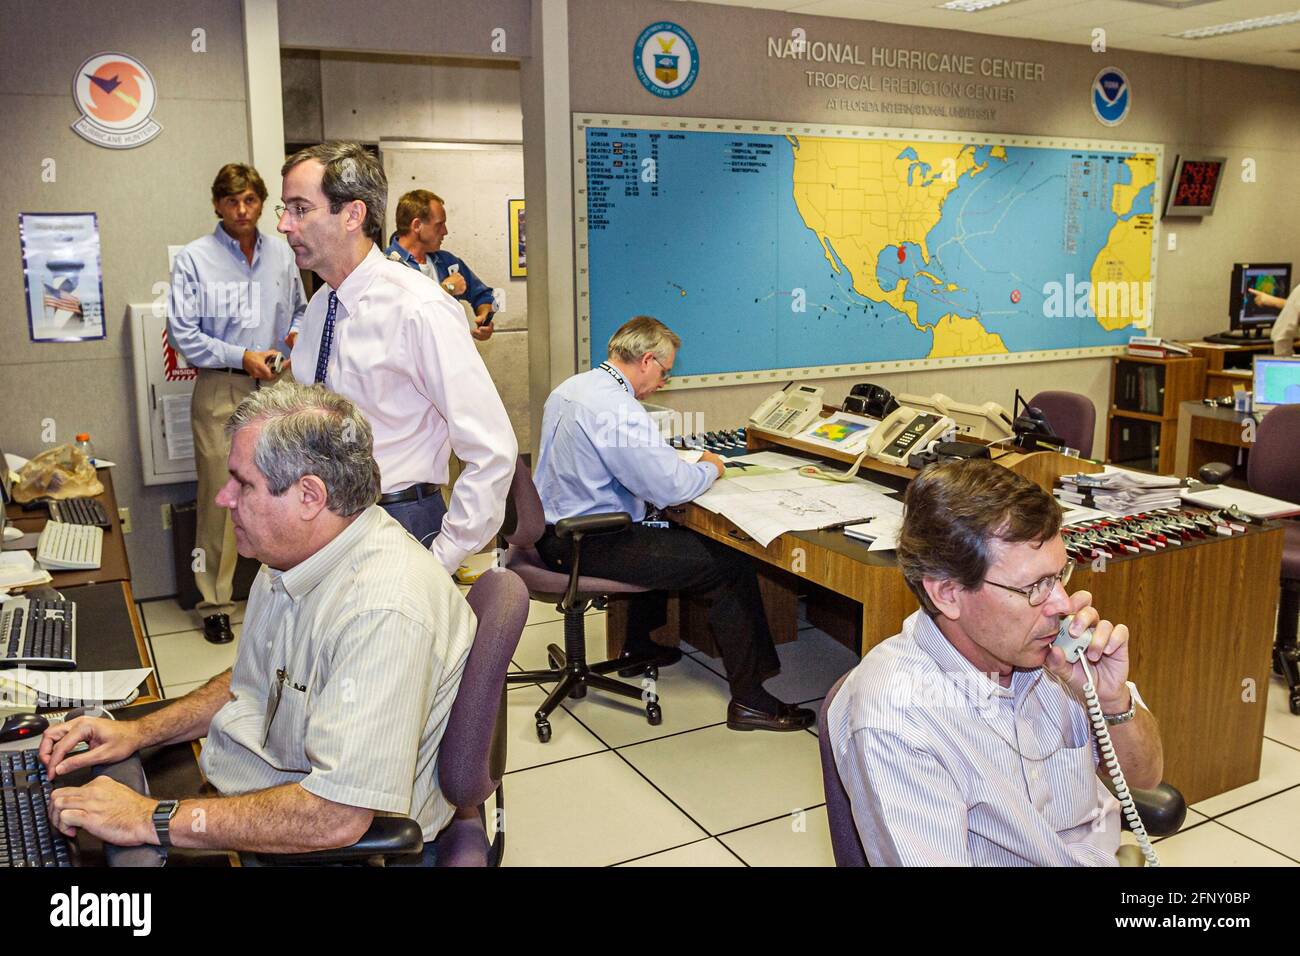 Miami Florida,National Hurricane Center centre,inside interior during Katrina weatherman weathermen meteorologists checking studying weather data Stock Photo